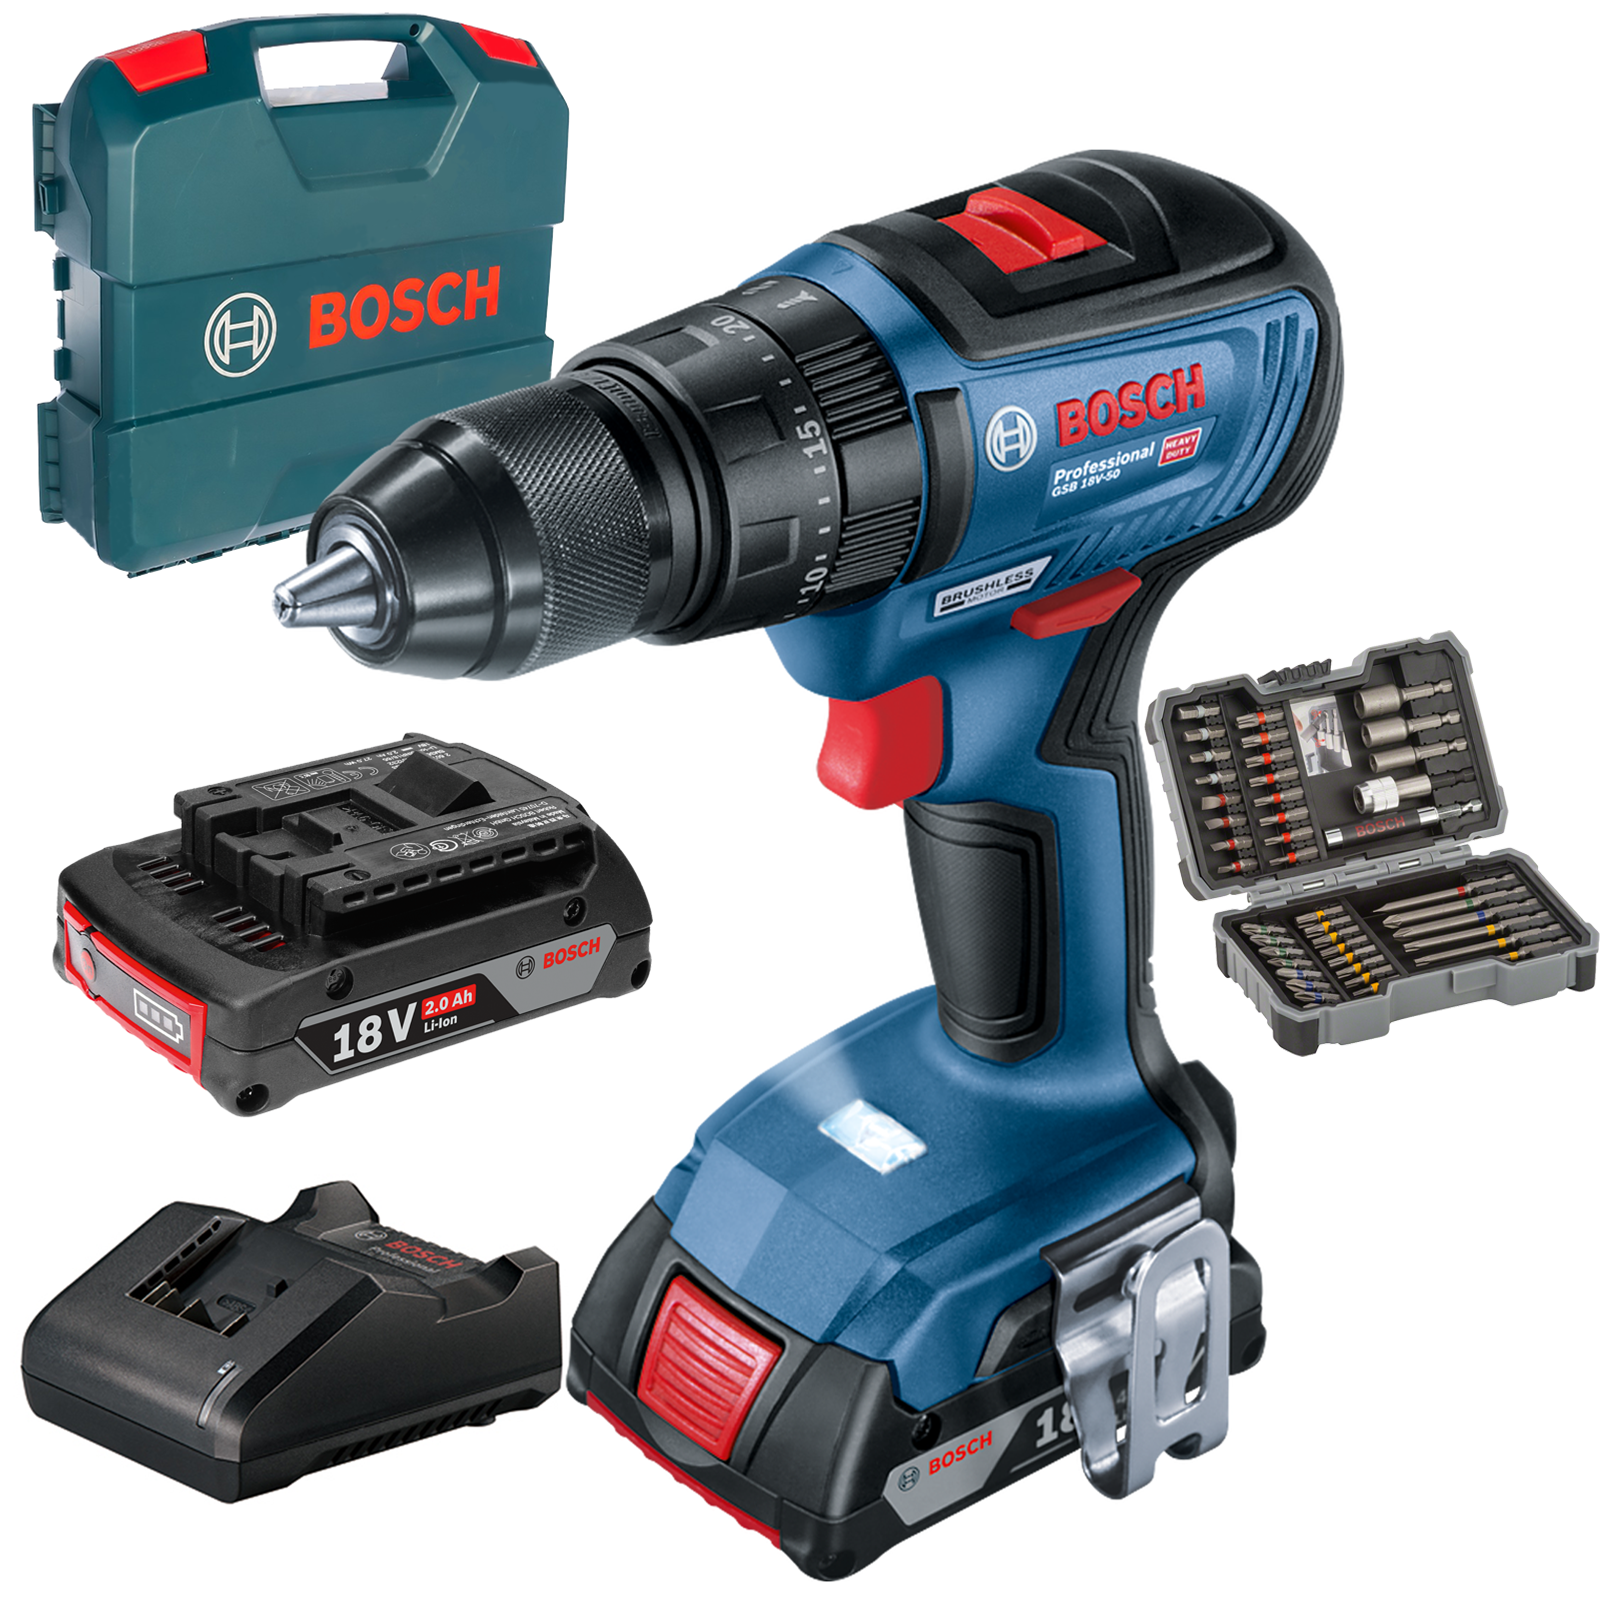 Bosch Professional Cordless Drill Set GSB 18V-50 + 40Pcs Accessories 0615990M8K Power Tool Services